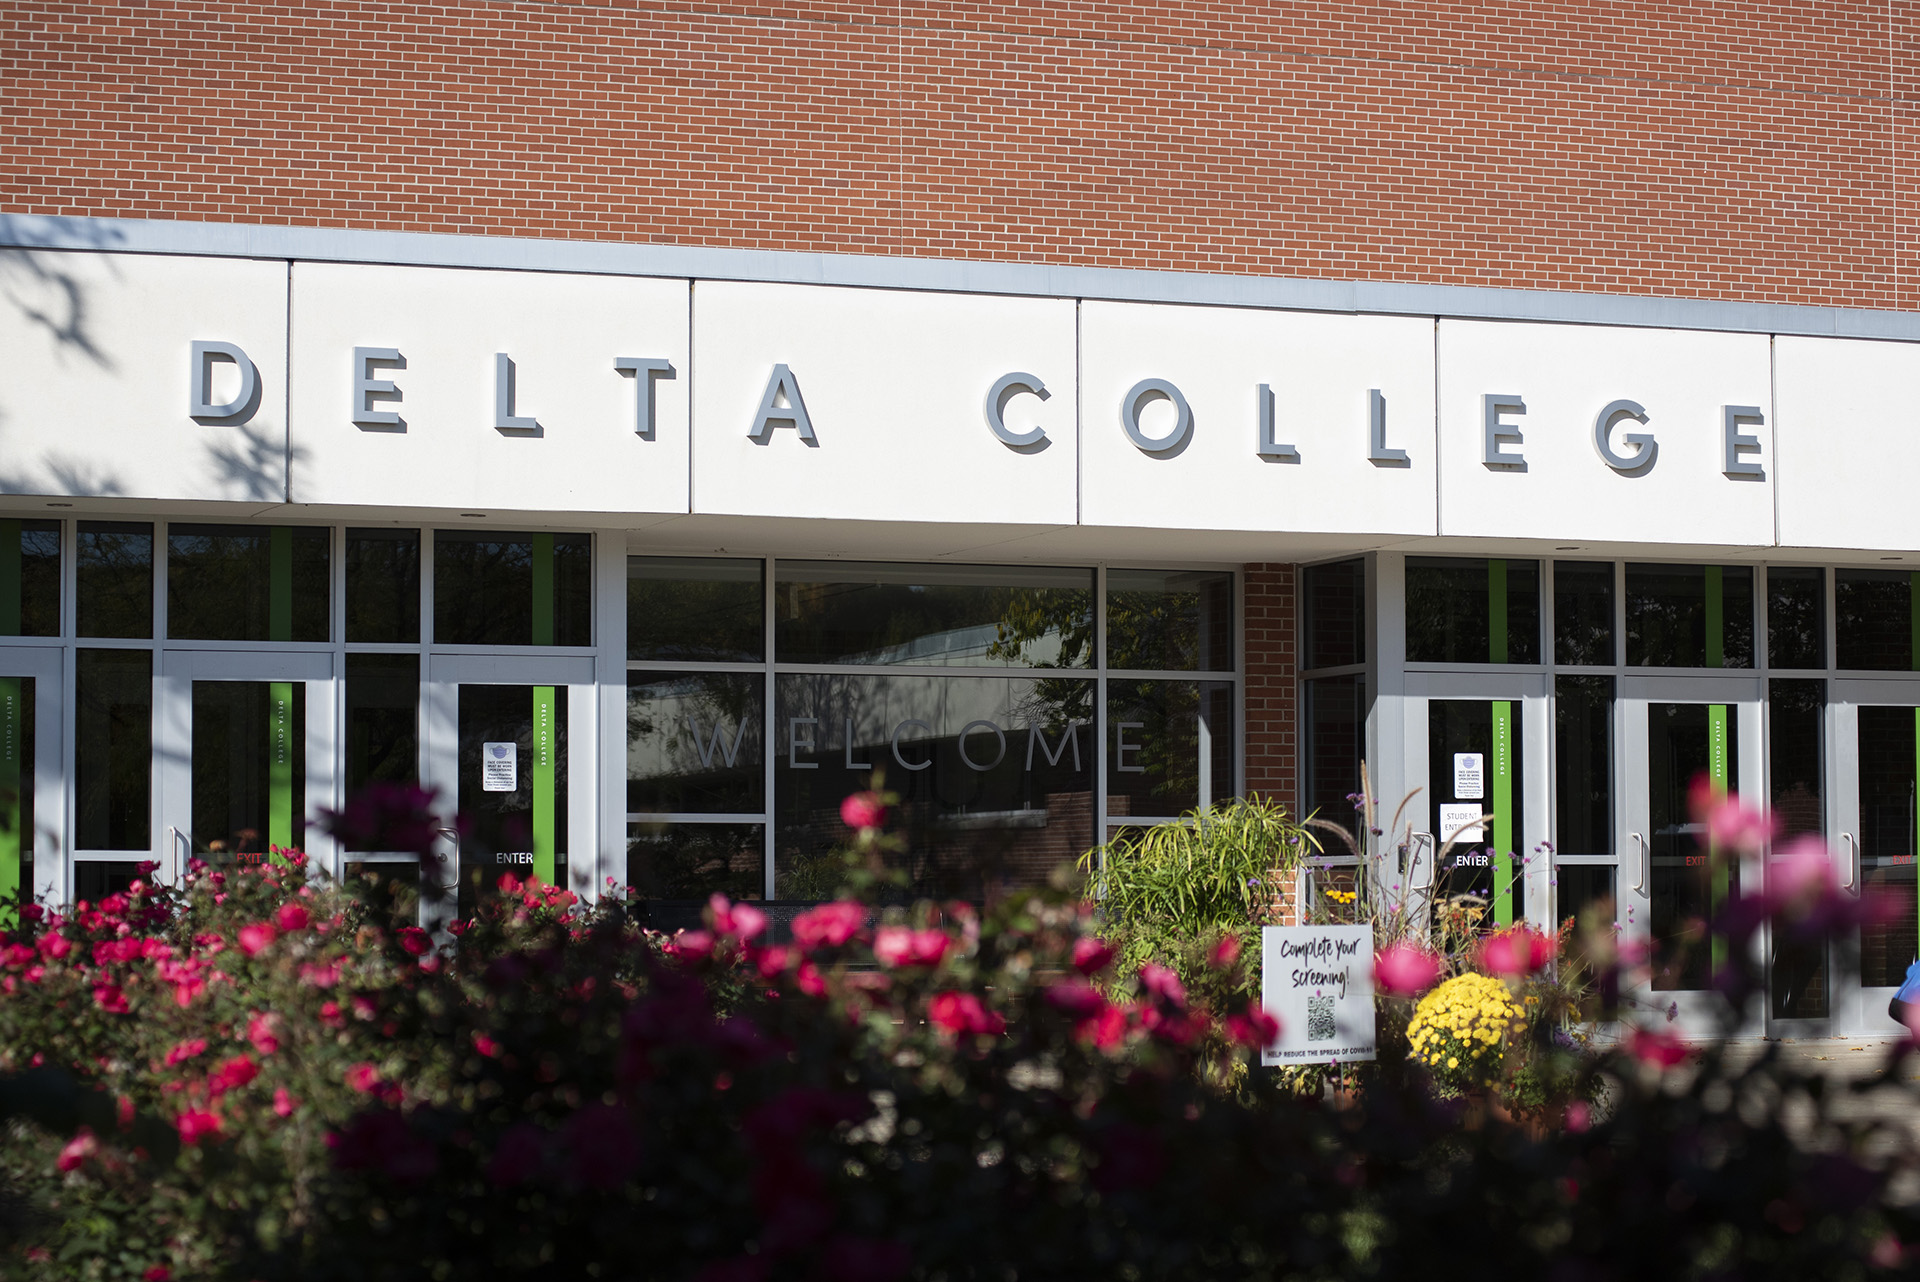 Delta University